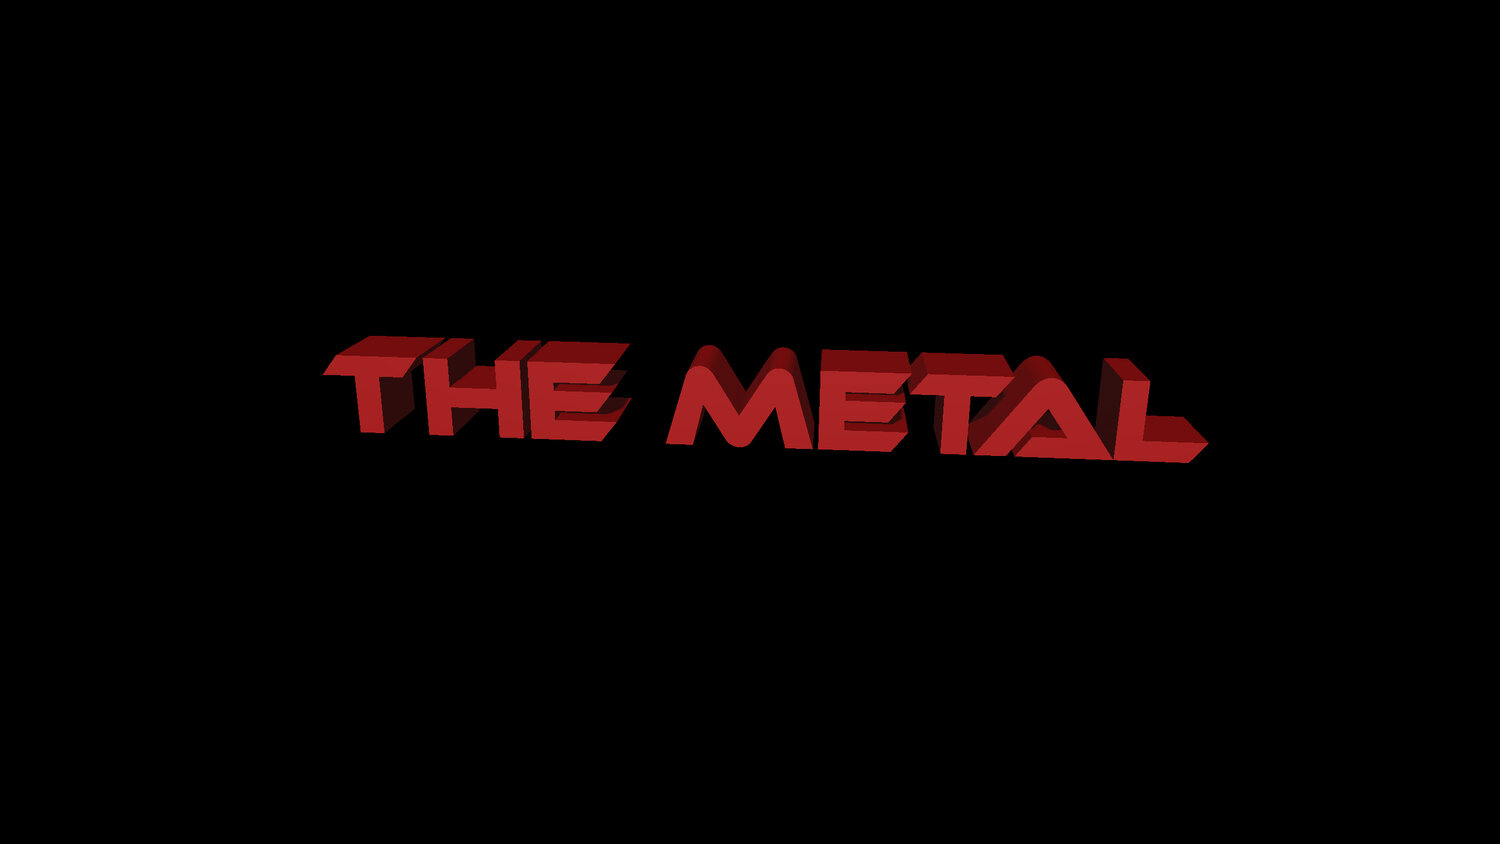 The Metal